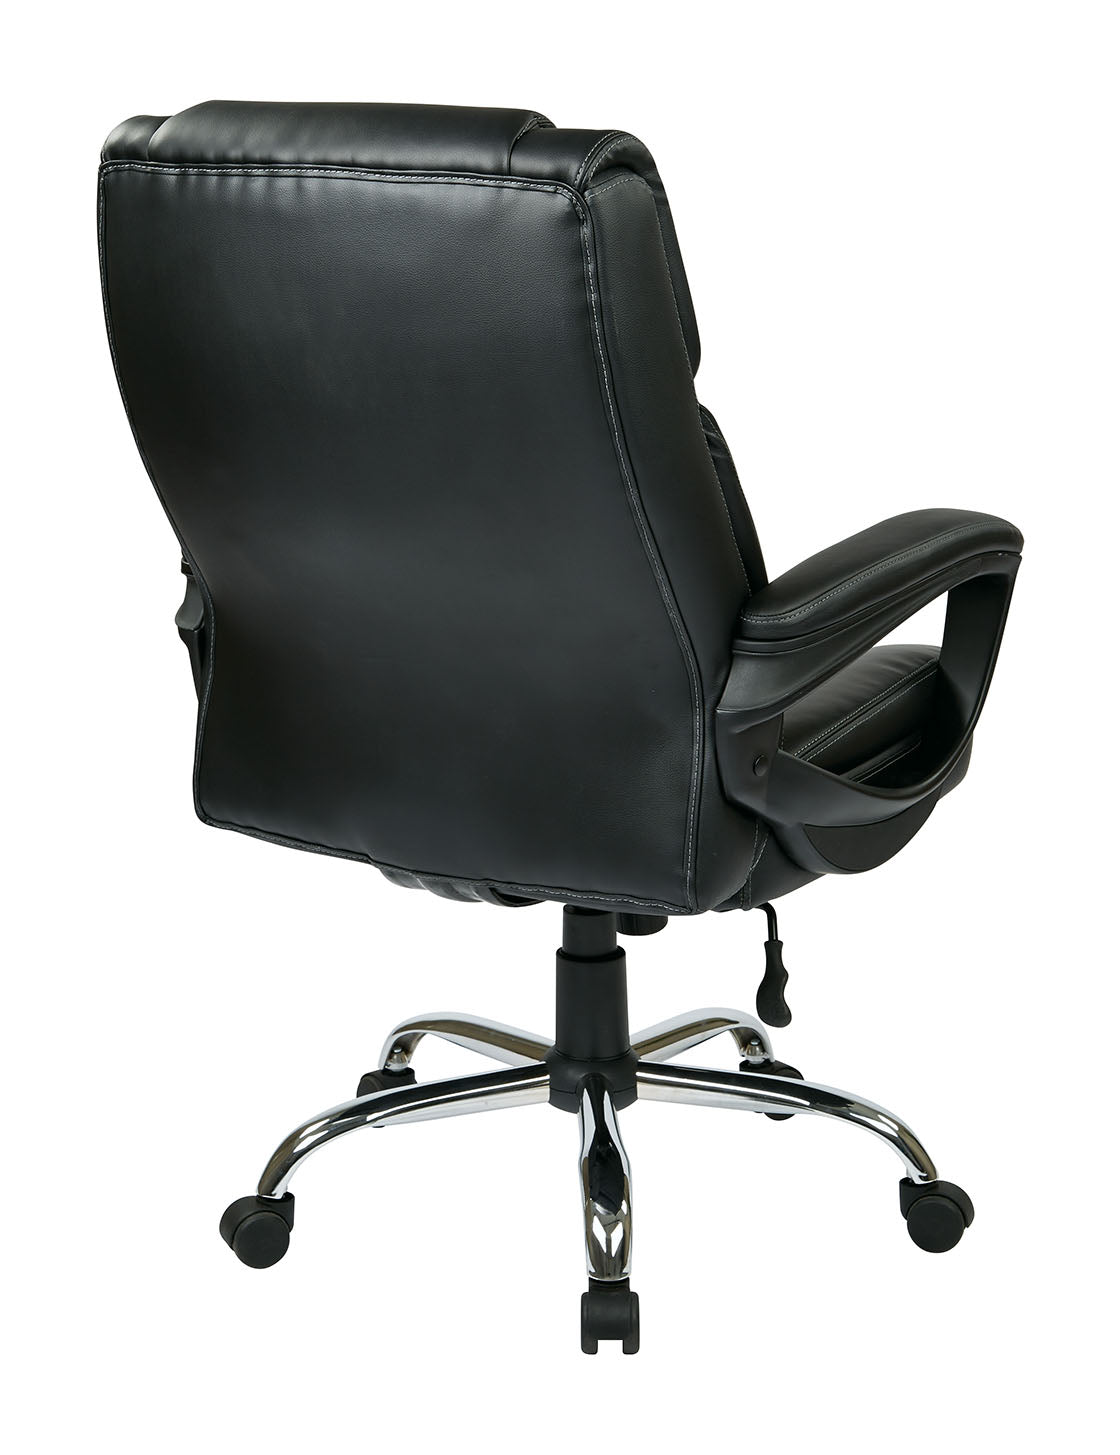 WorkSmart Executive Eco-Leather Big Mans Chair - EC1283C-EC3 - Functional Office Furniture - EC1283C-EC3